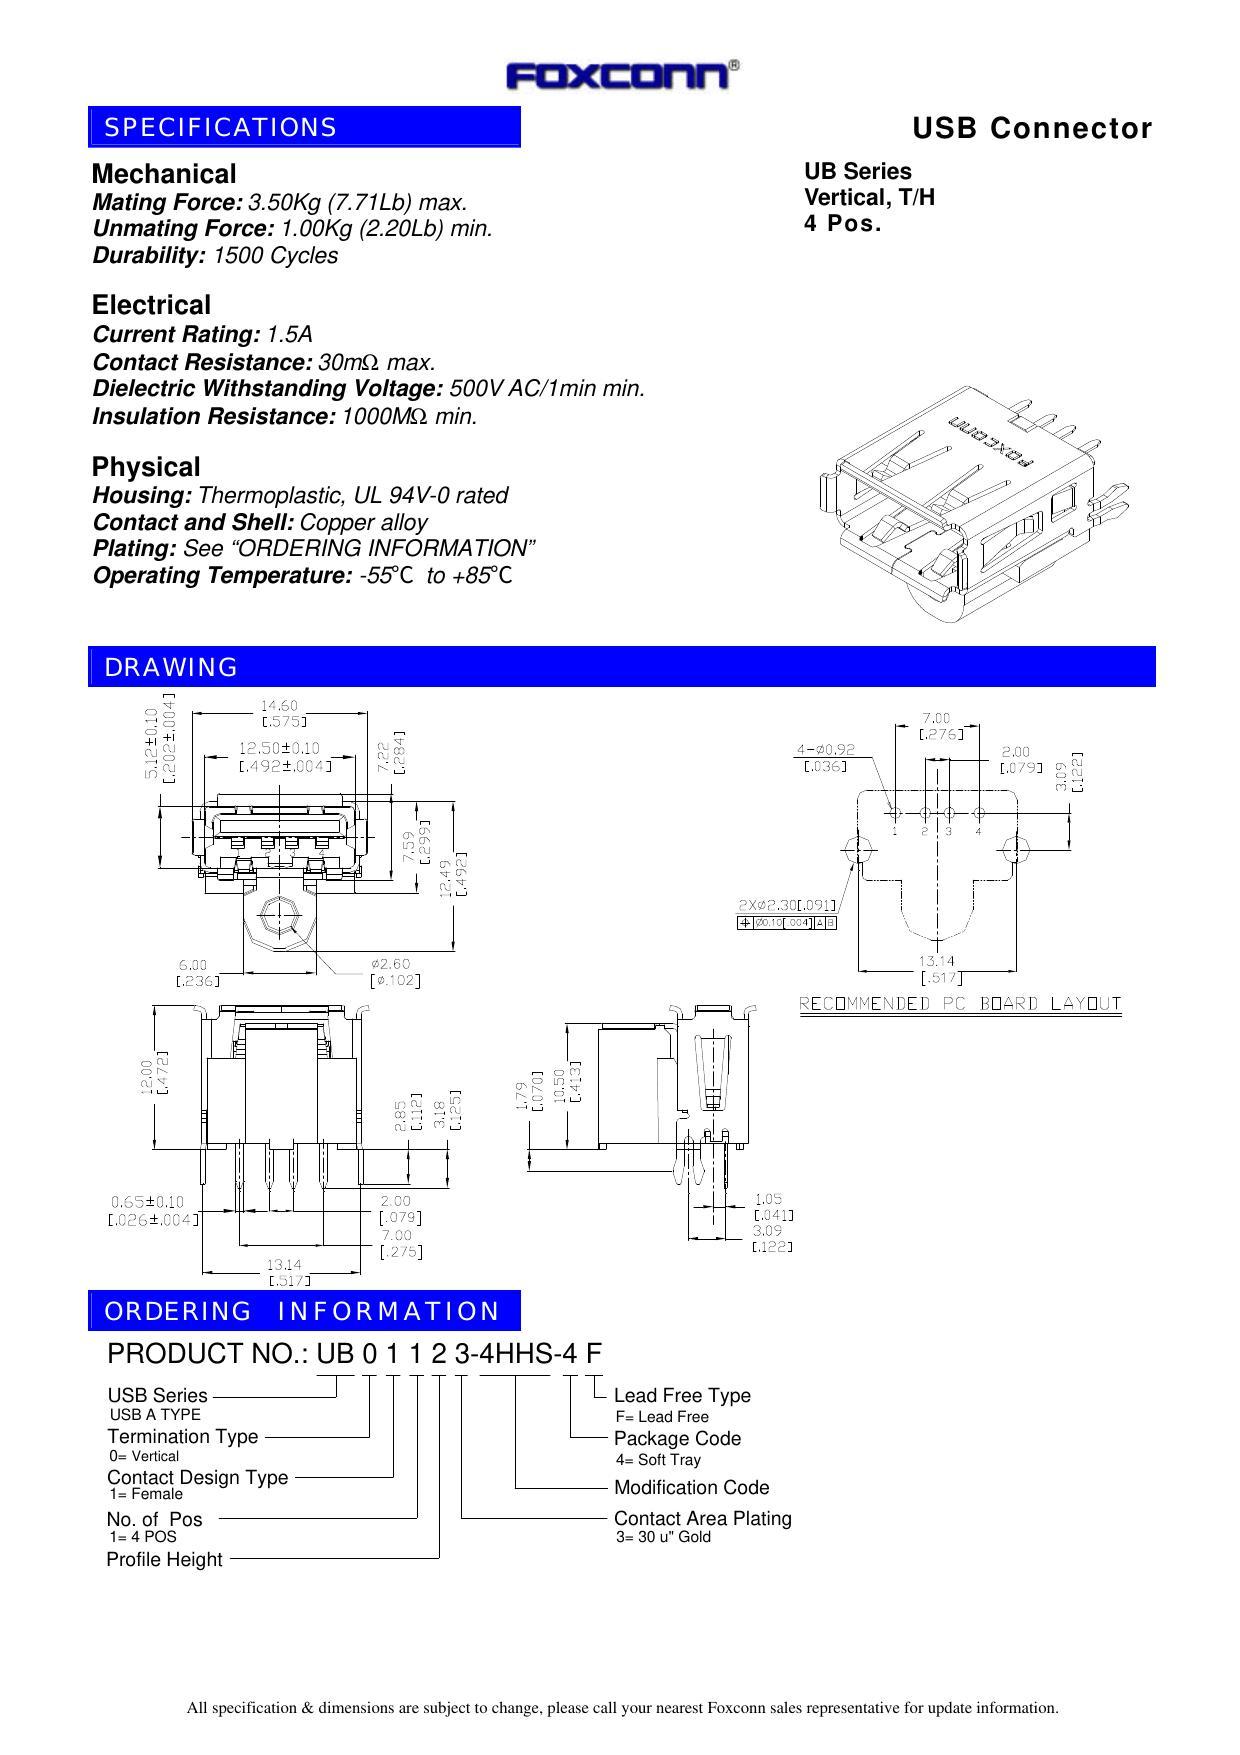 foxconn-usb-connector-ub-series-vertical-tih-4-pos.pdf